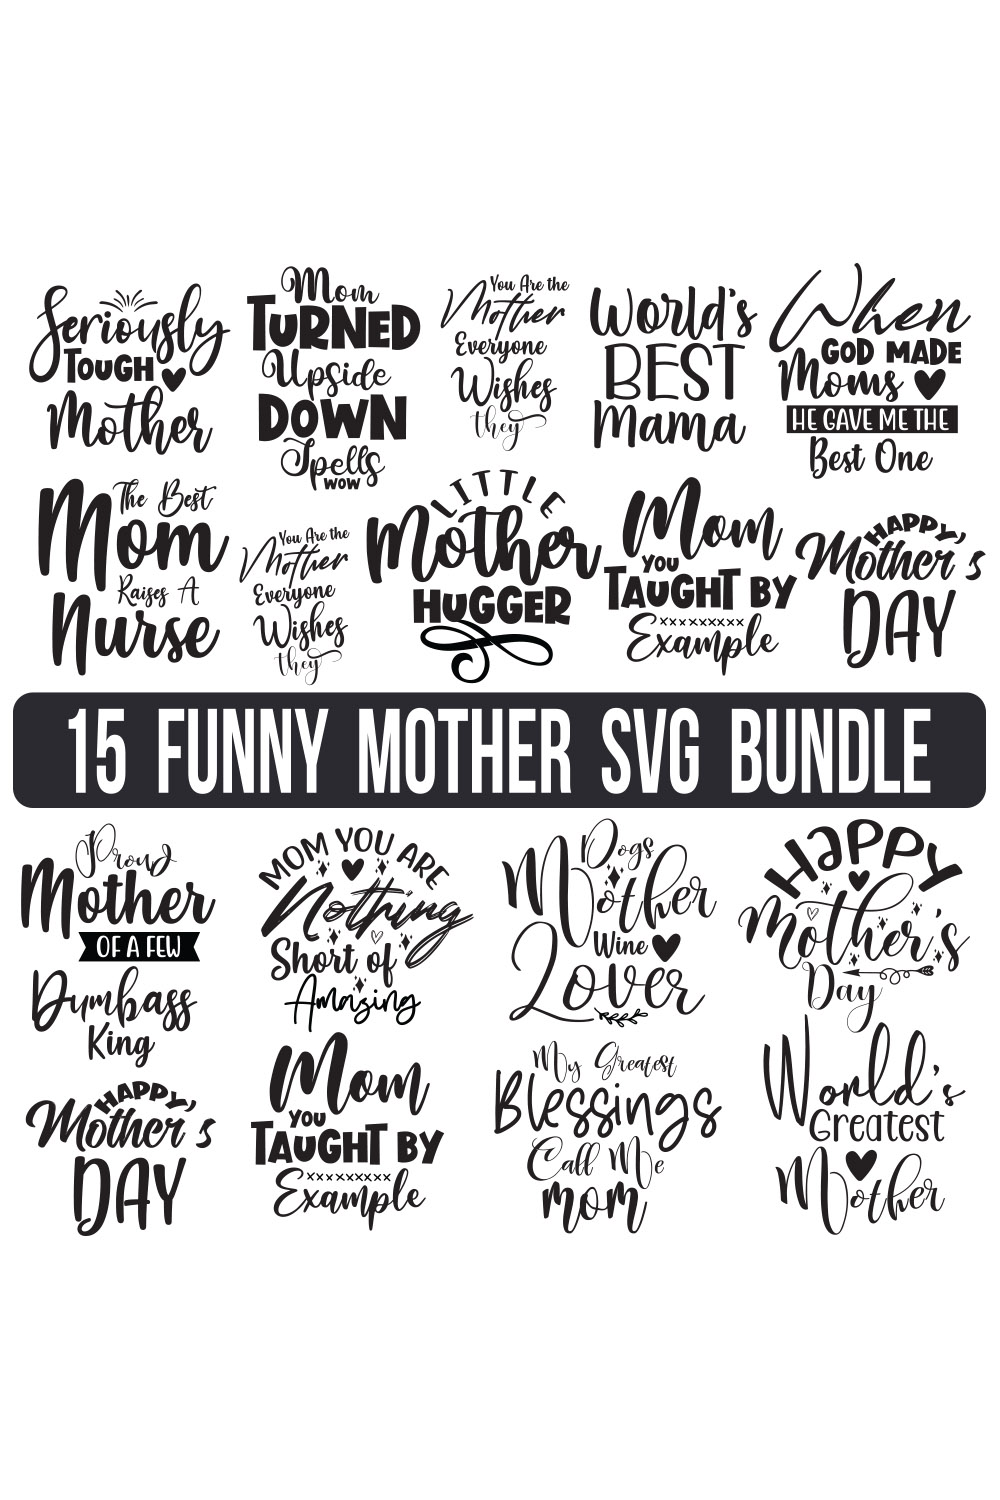 Women's Day SVG Bundle,Women's Day SVG designs,Girl power designs, SVG files,Digital downloads, Mom Bundle SVG, Mother's Day Svg, Mom Svg, pinterest preview image.